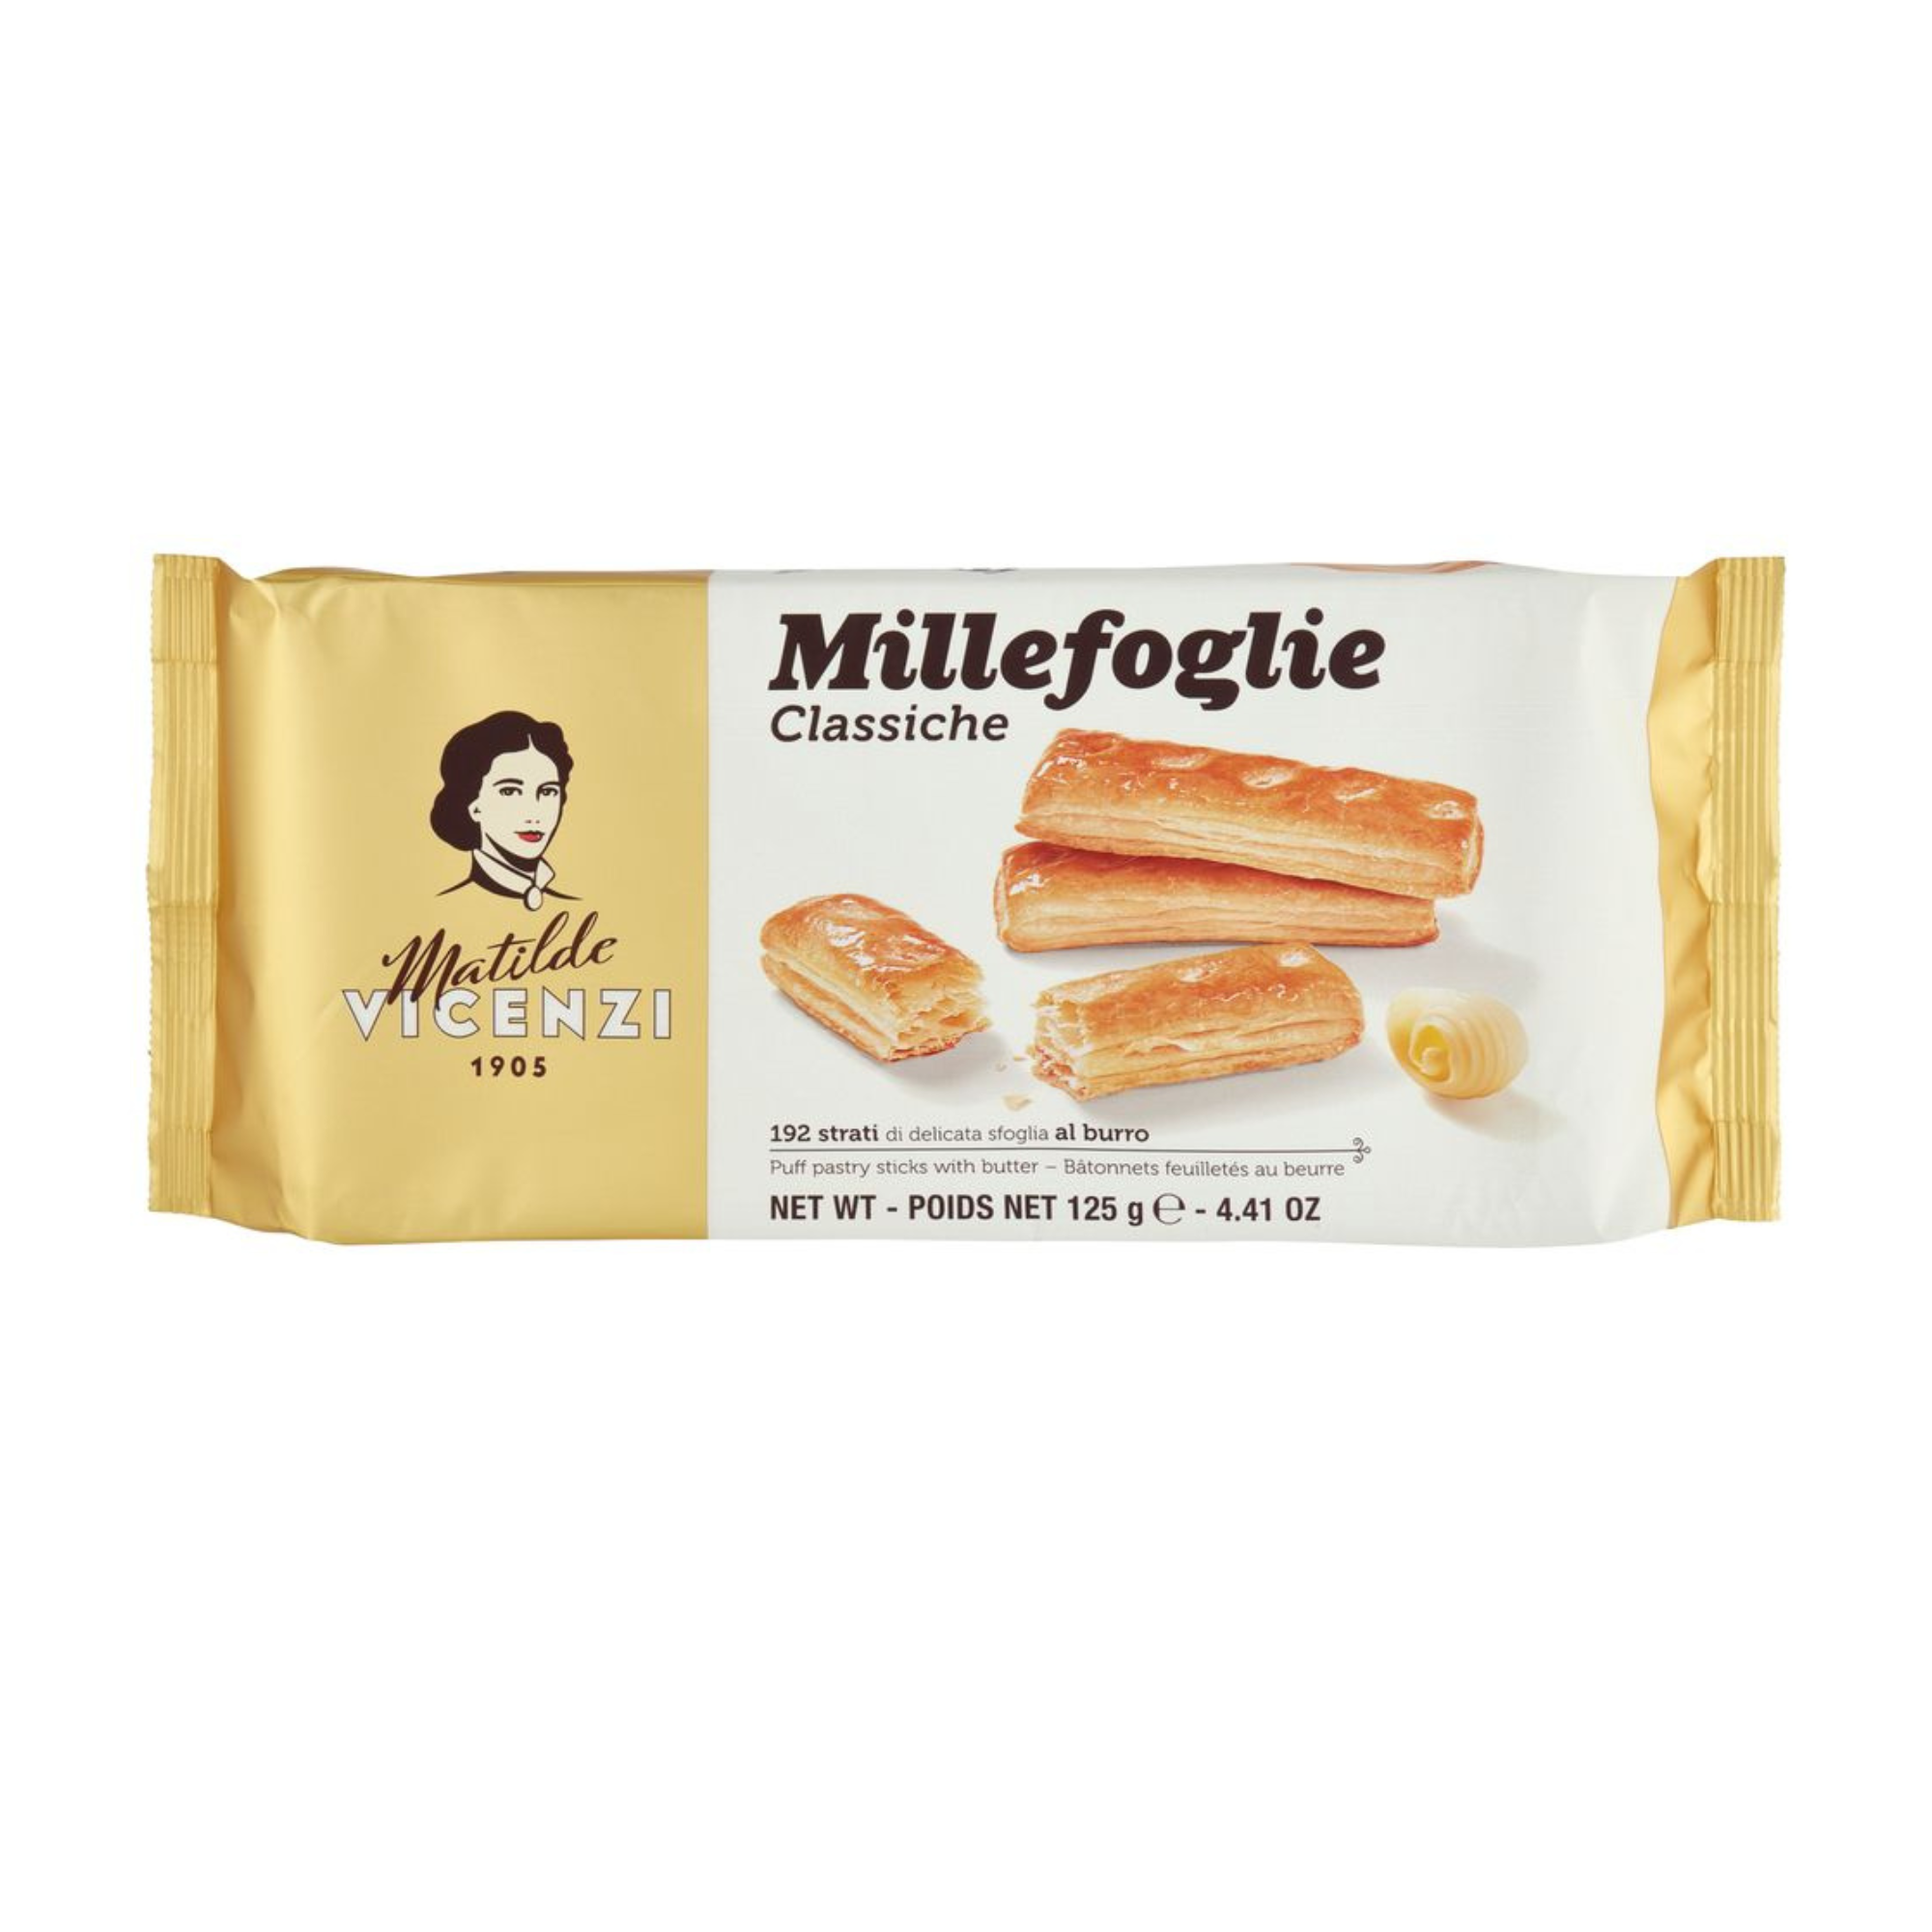 Millefoglie Classiche Sugar Coated Puff Pastry 125g